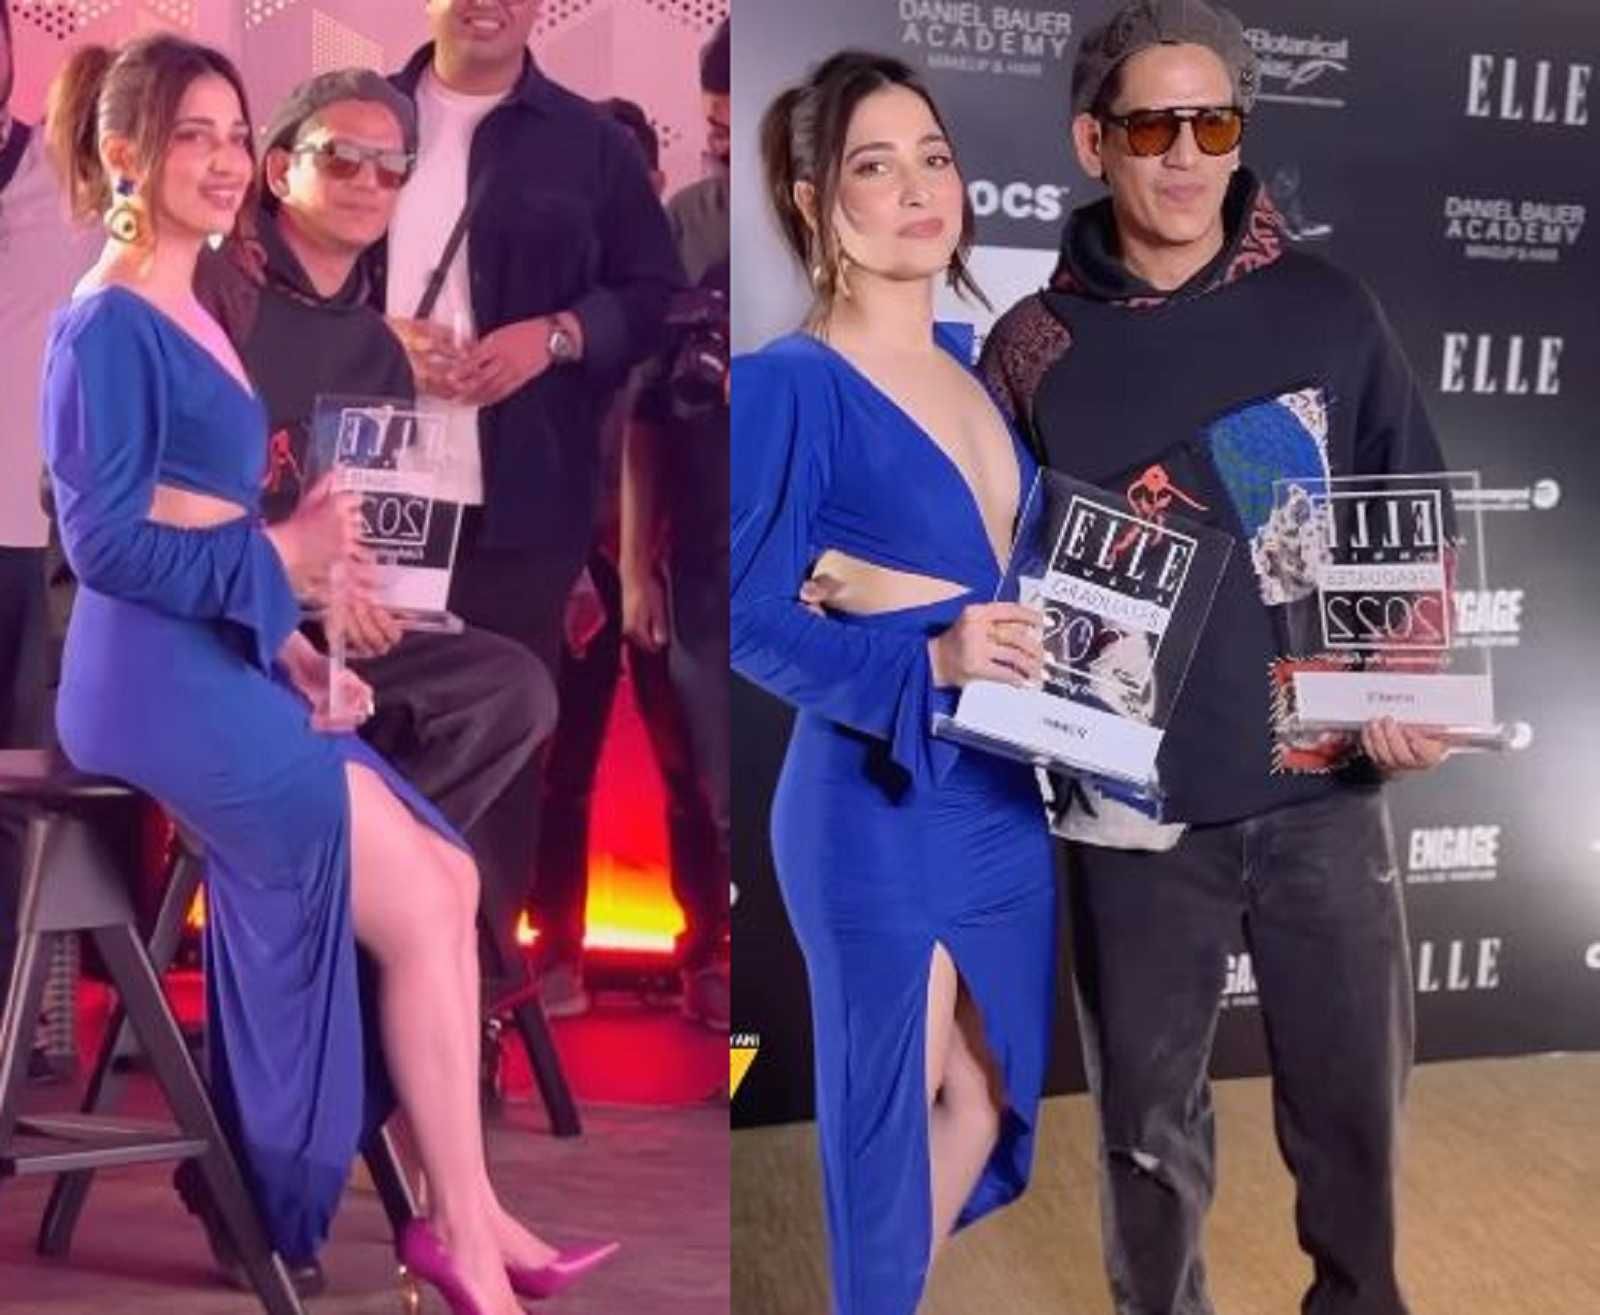 'Isse kaise patt gayi ye': Rumoured couple Tamannaah Bhatia and Vijay Varma pose together at Elle Awards, netizens react